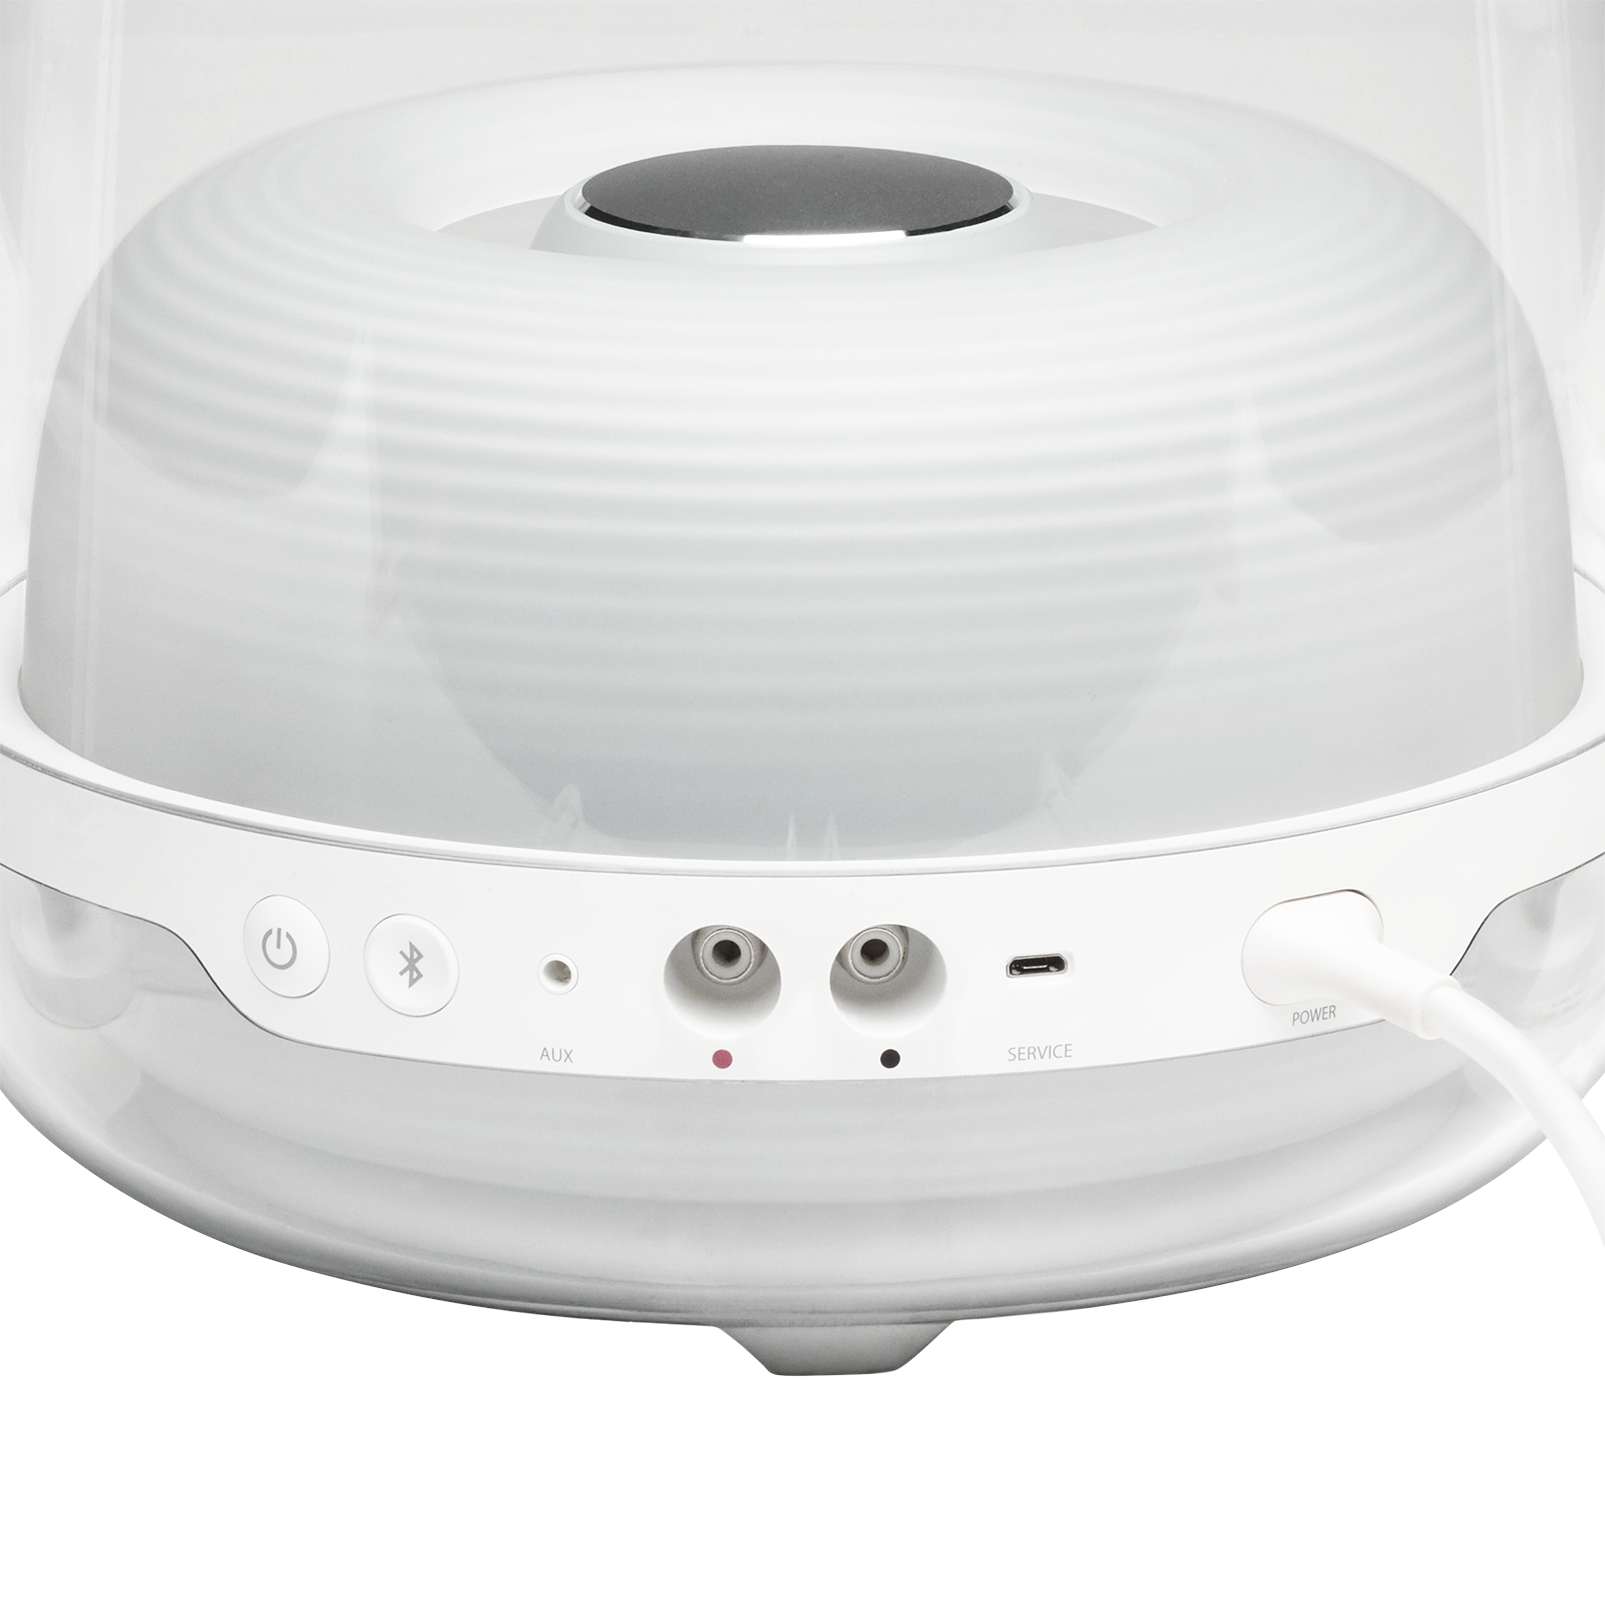 Harman Kardon SoundSticks 4 - White - Bluetooth Speaker System - Detailshot 1